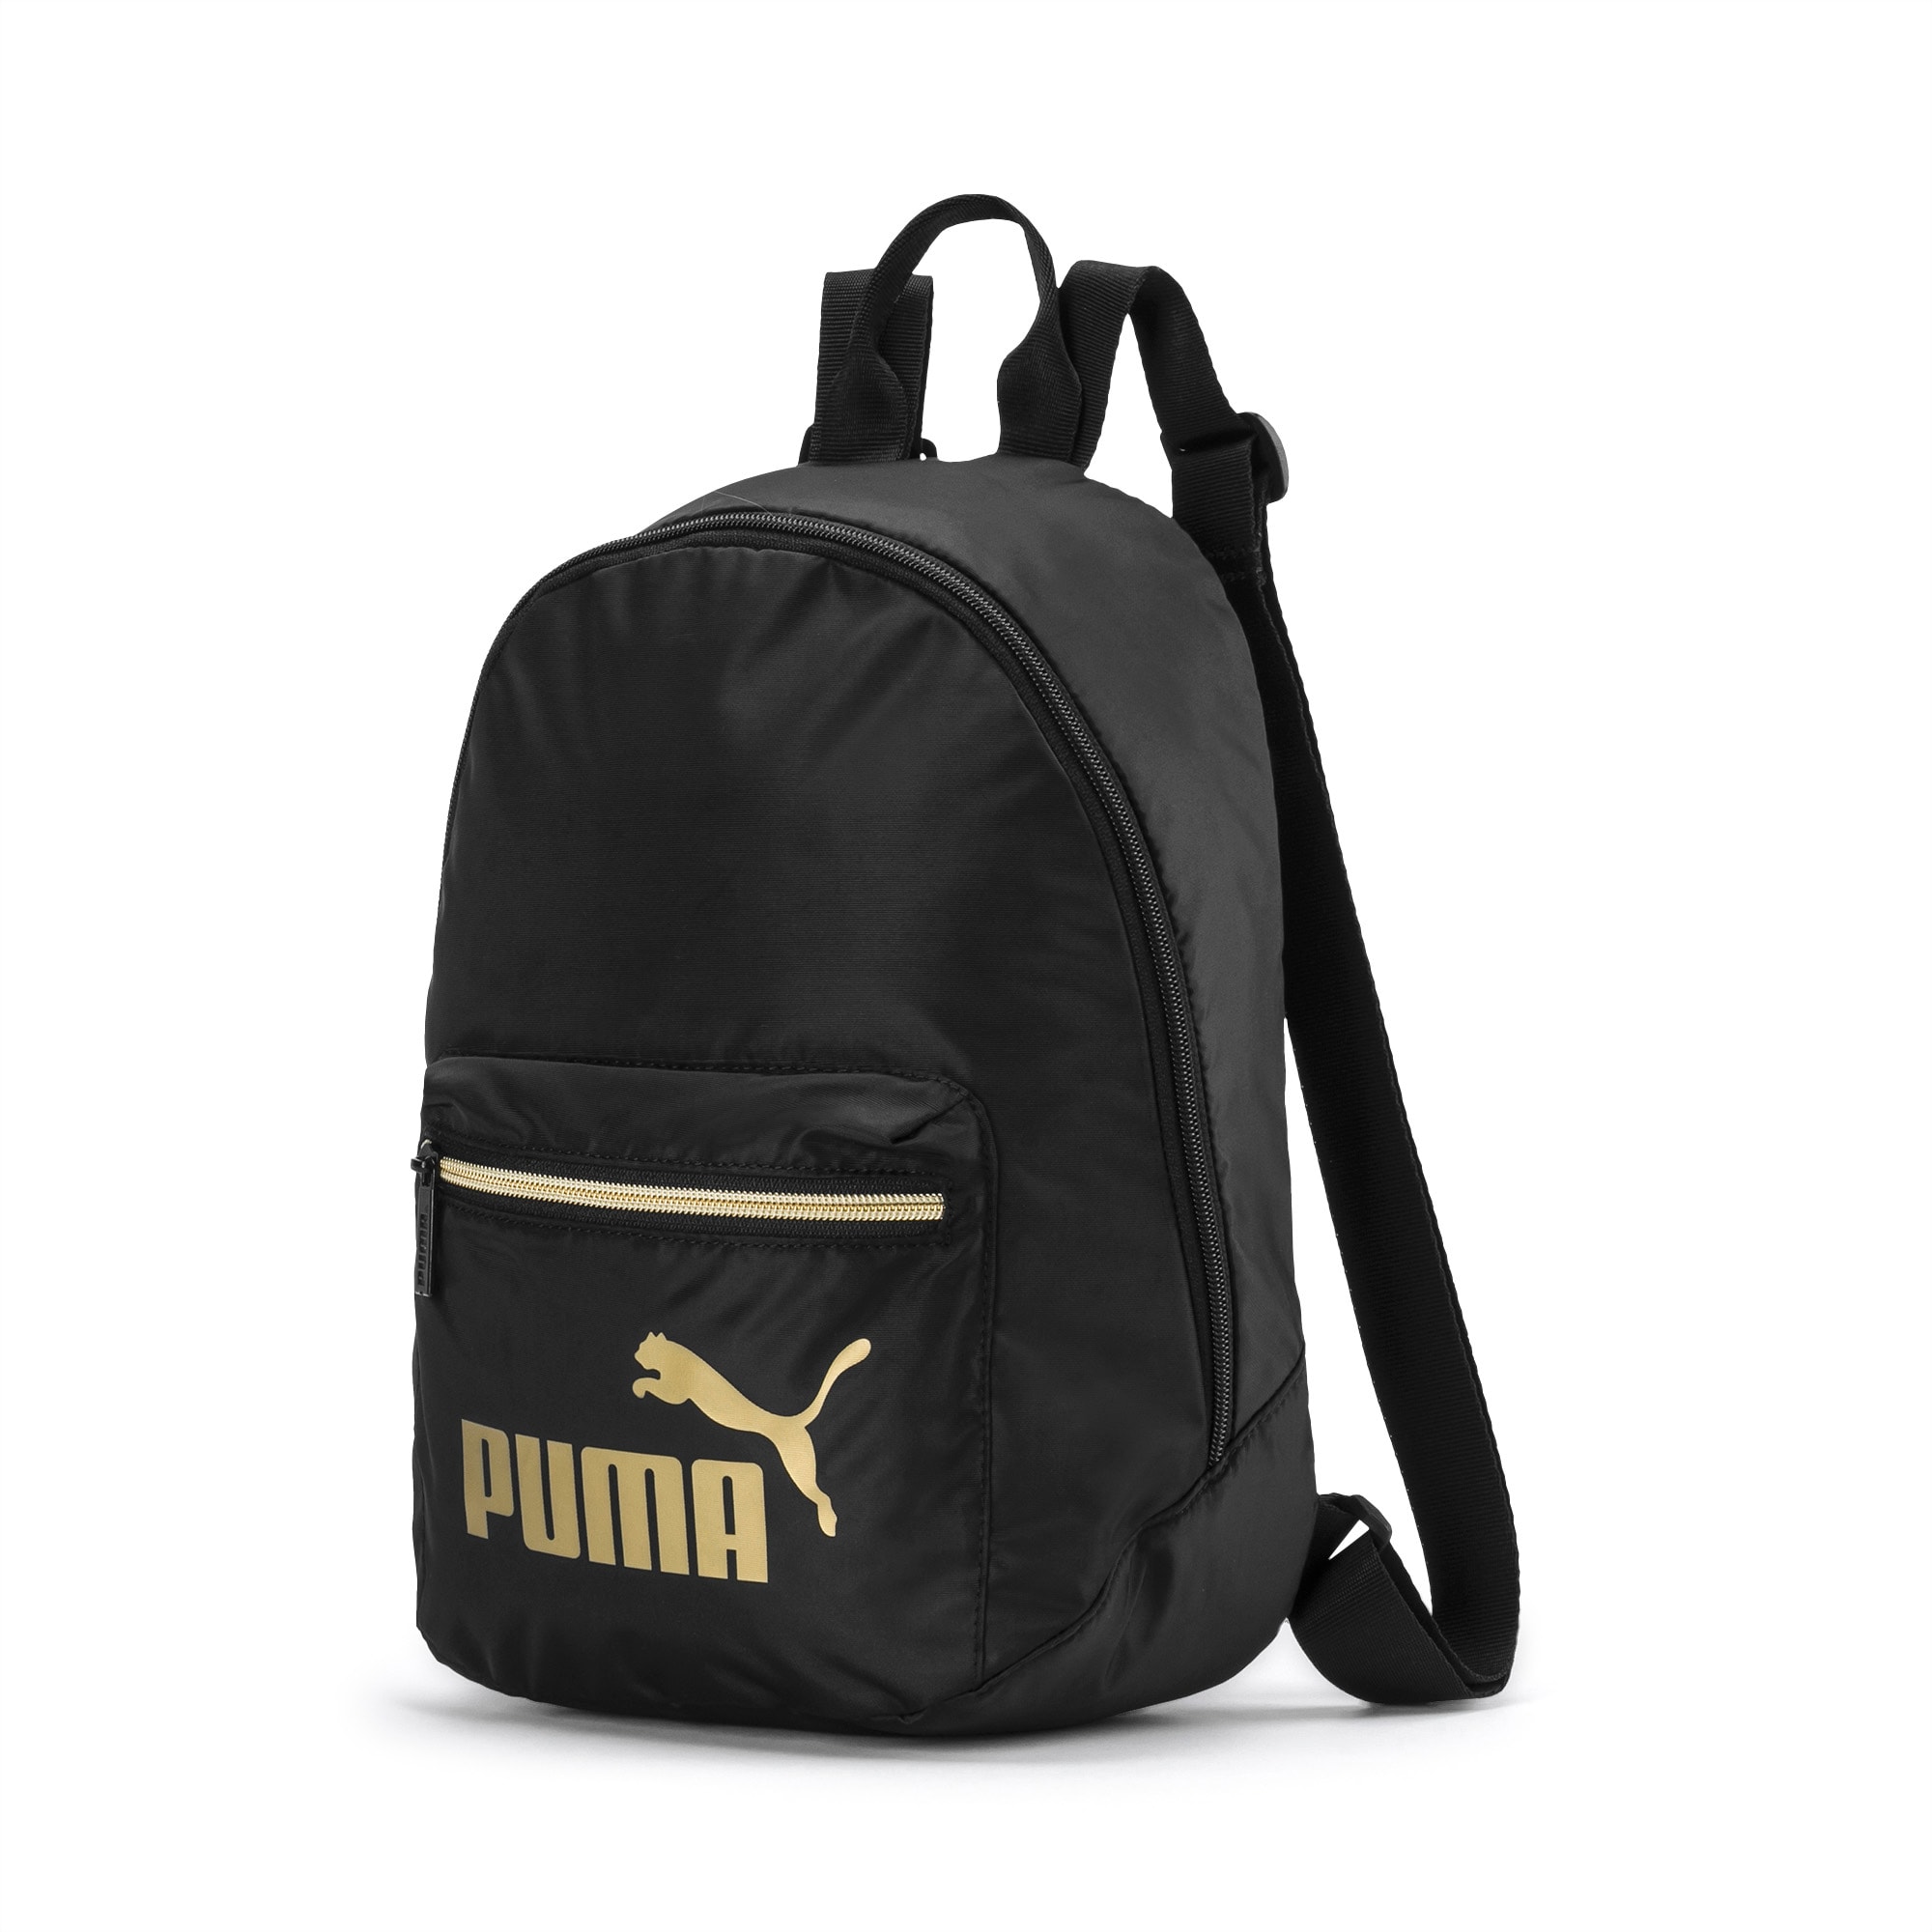 gold puma bag